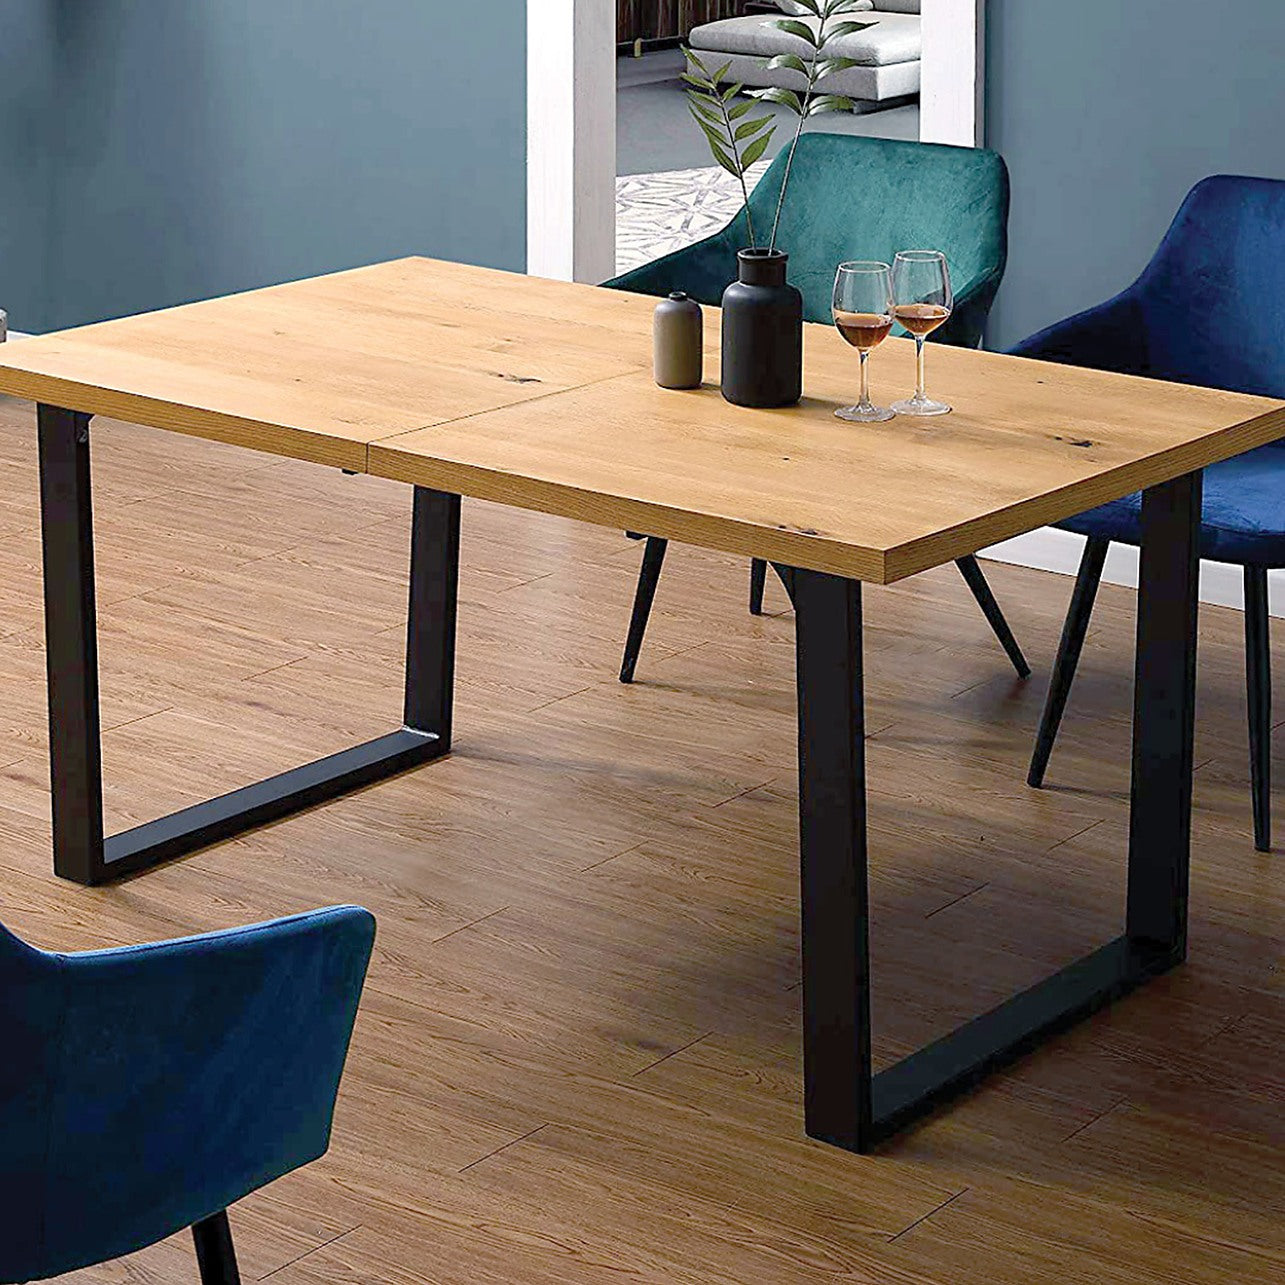 Square-Shaped Table Bench Desk Legs Retro Industrial Design Fully Welded -  Black - Black - Square - Furniture > Home Furniture